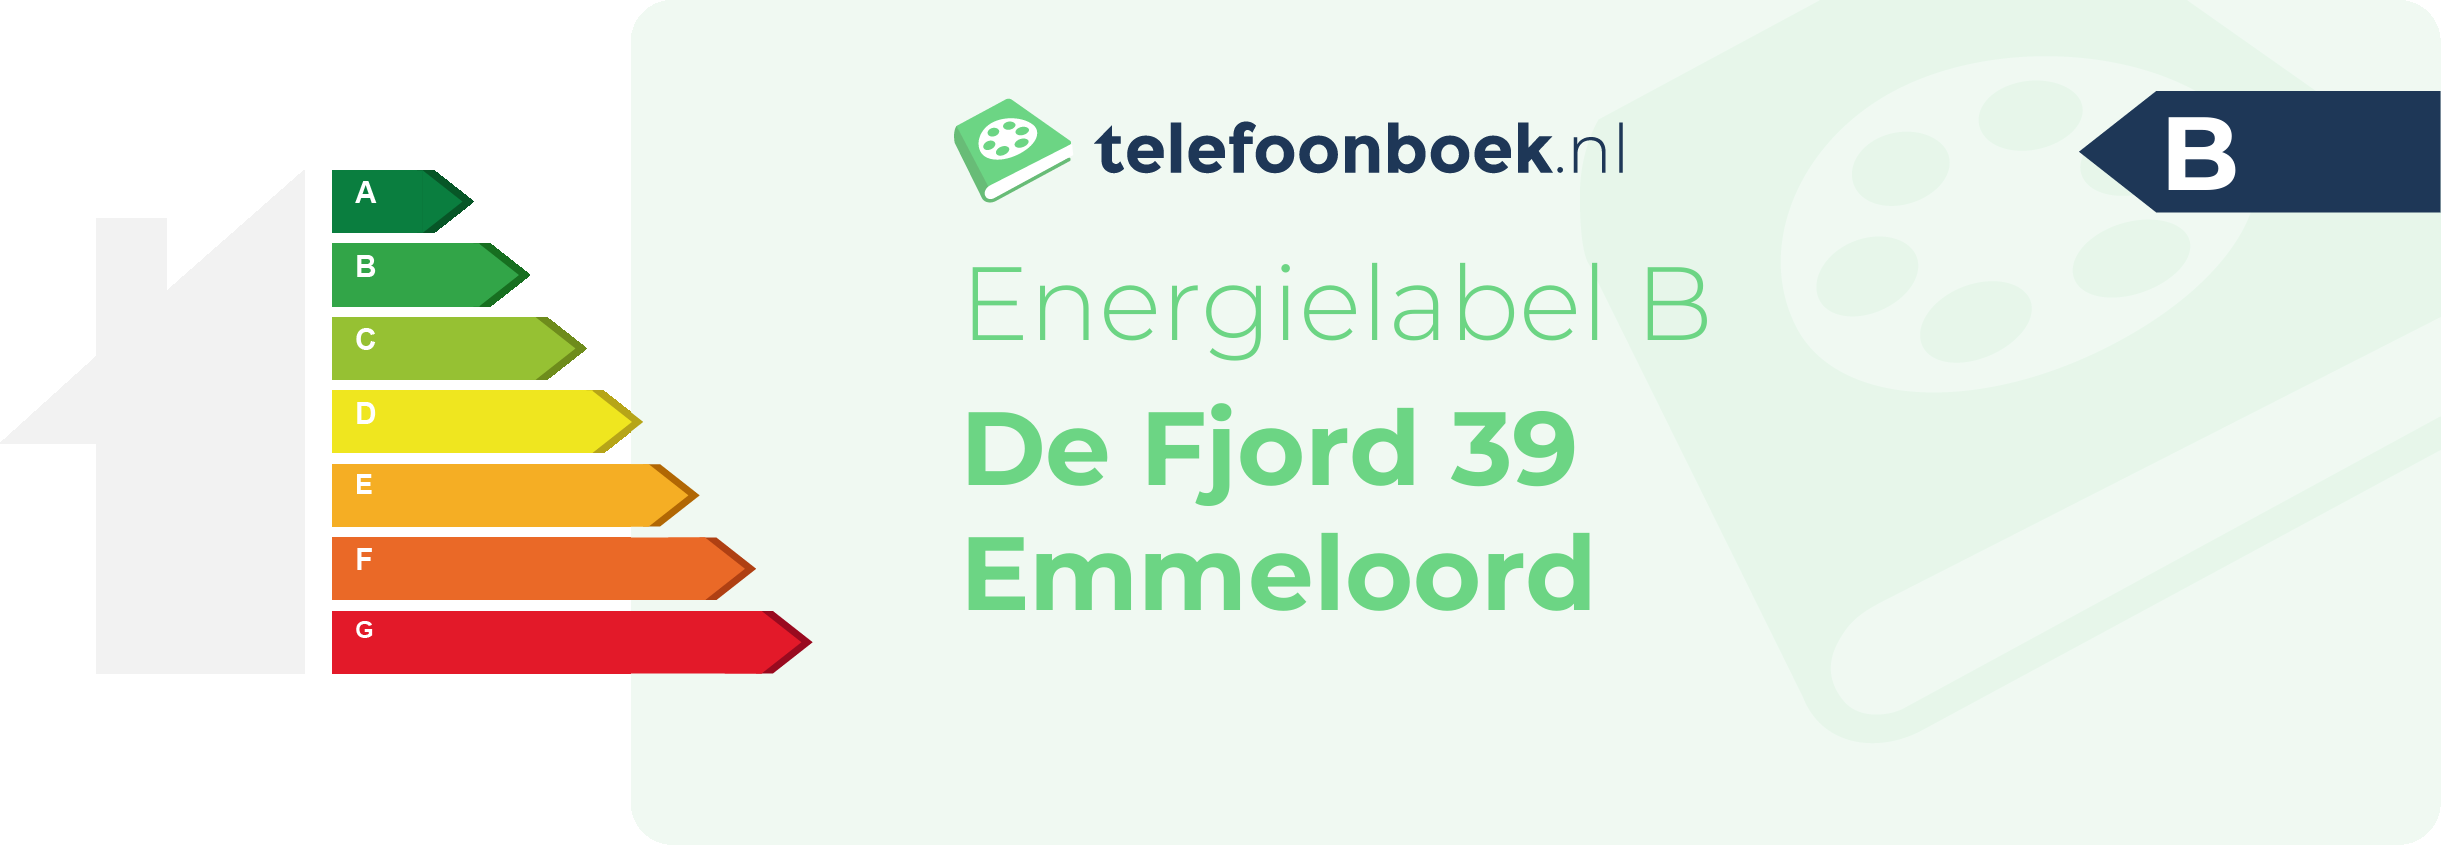 Energielabel De Fjord 39 Emmeloord